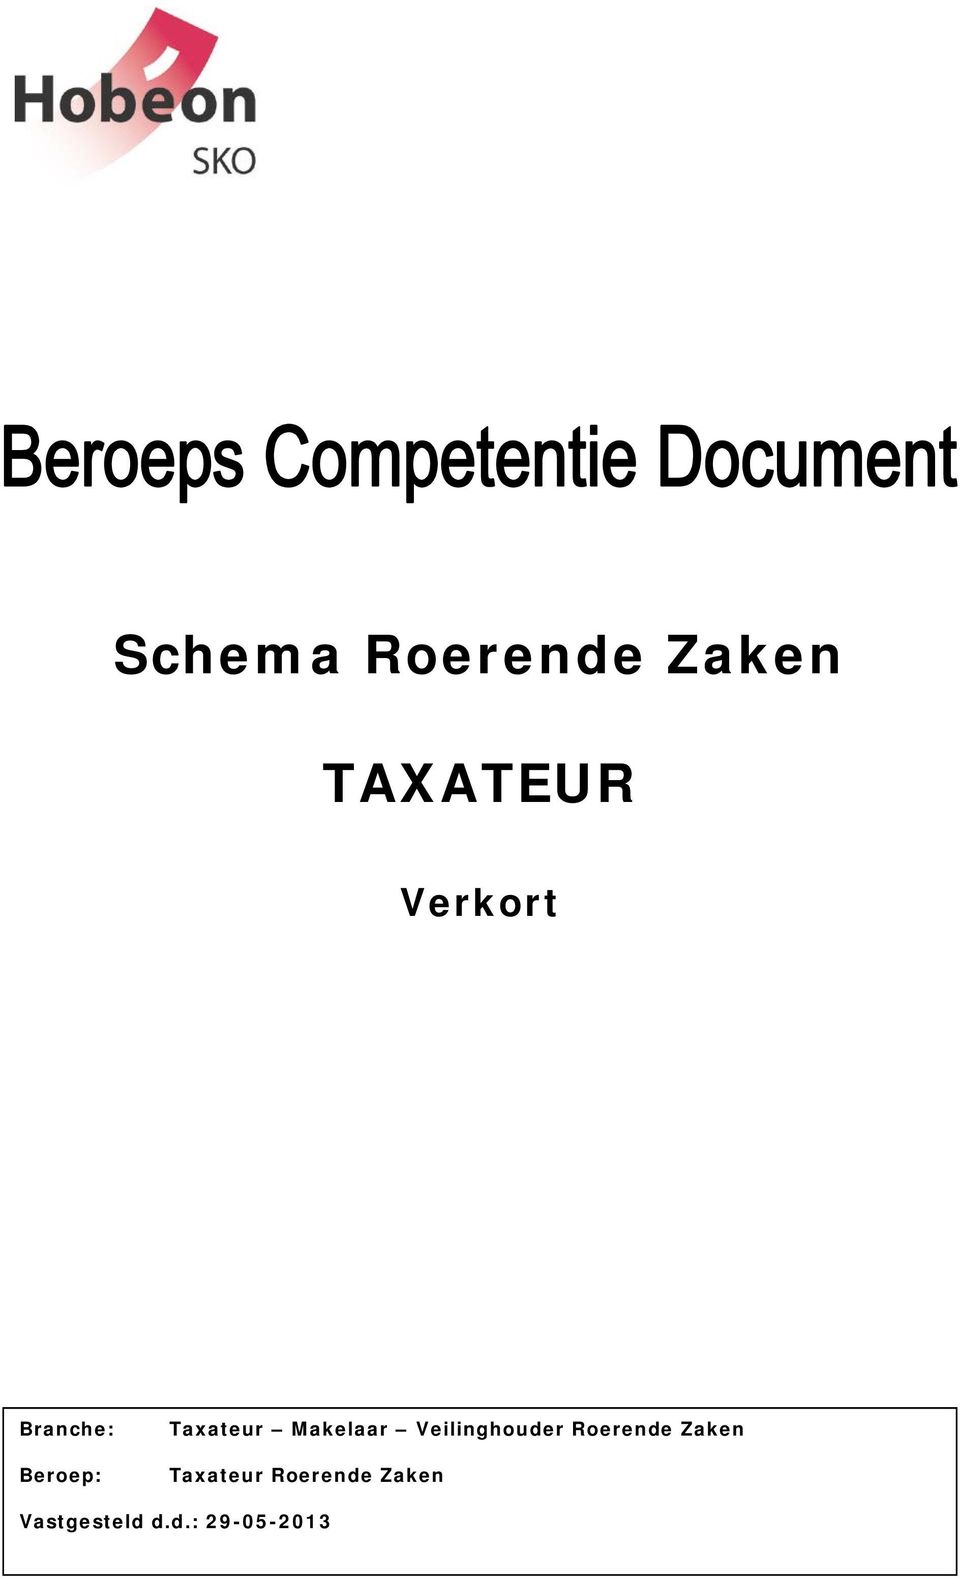 Veilinghouder Roerende Zaken Taxateur